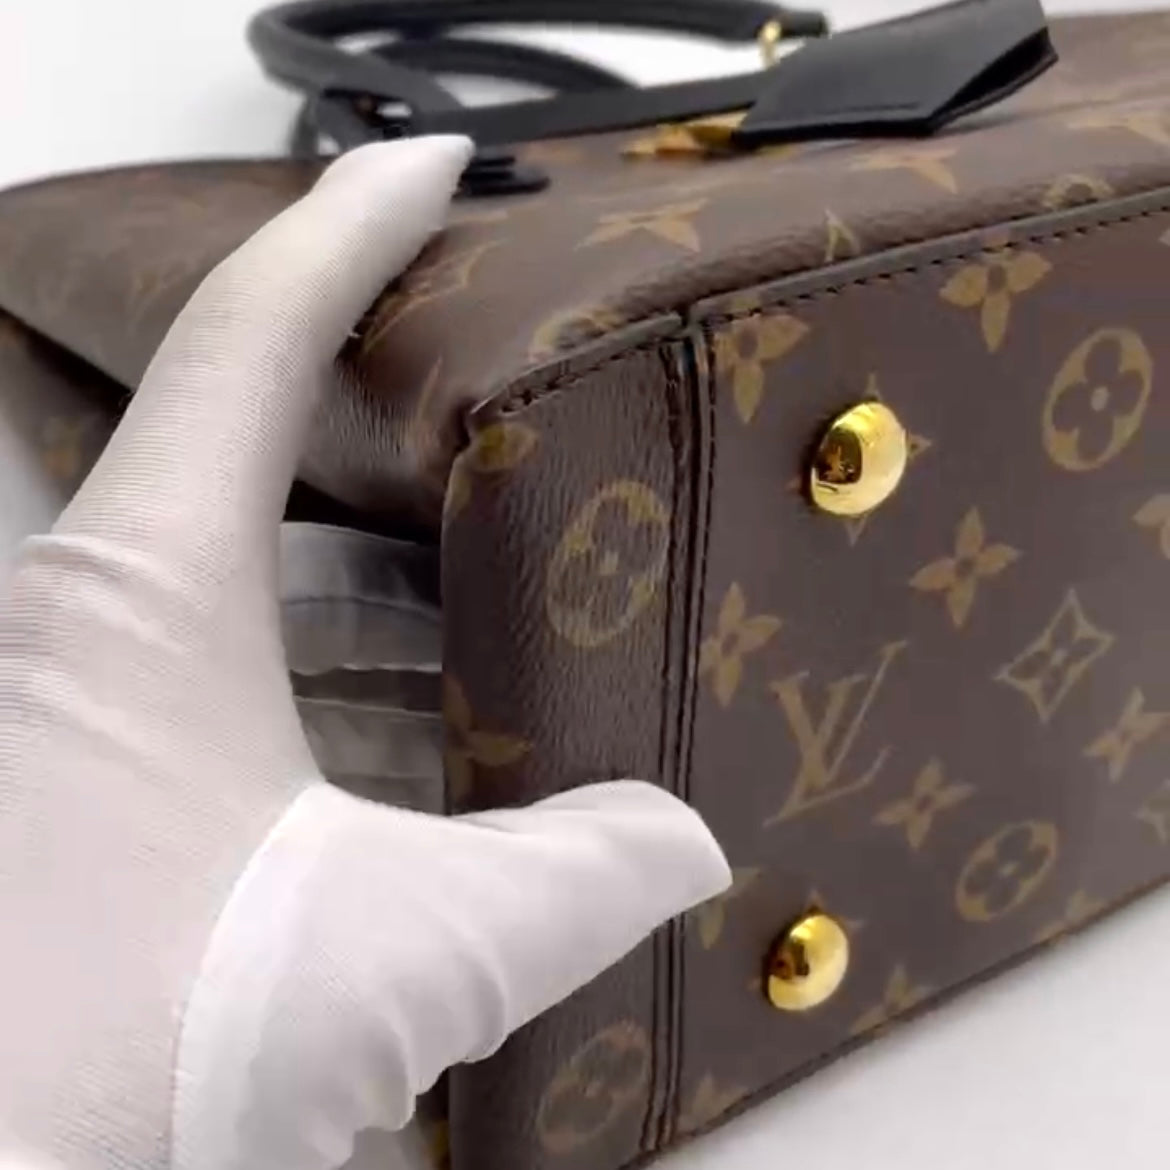 Preloved Louis Vuitton Flower Tote Bag